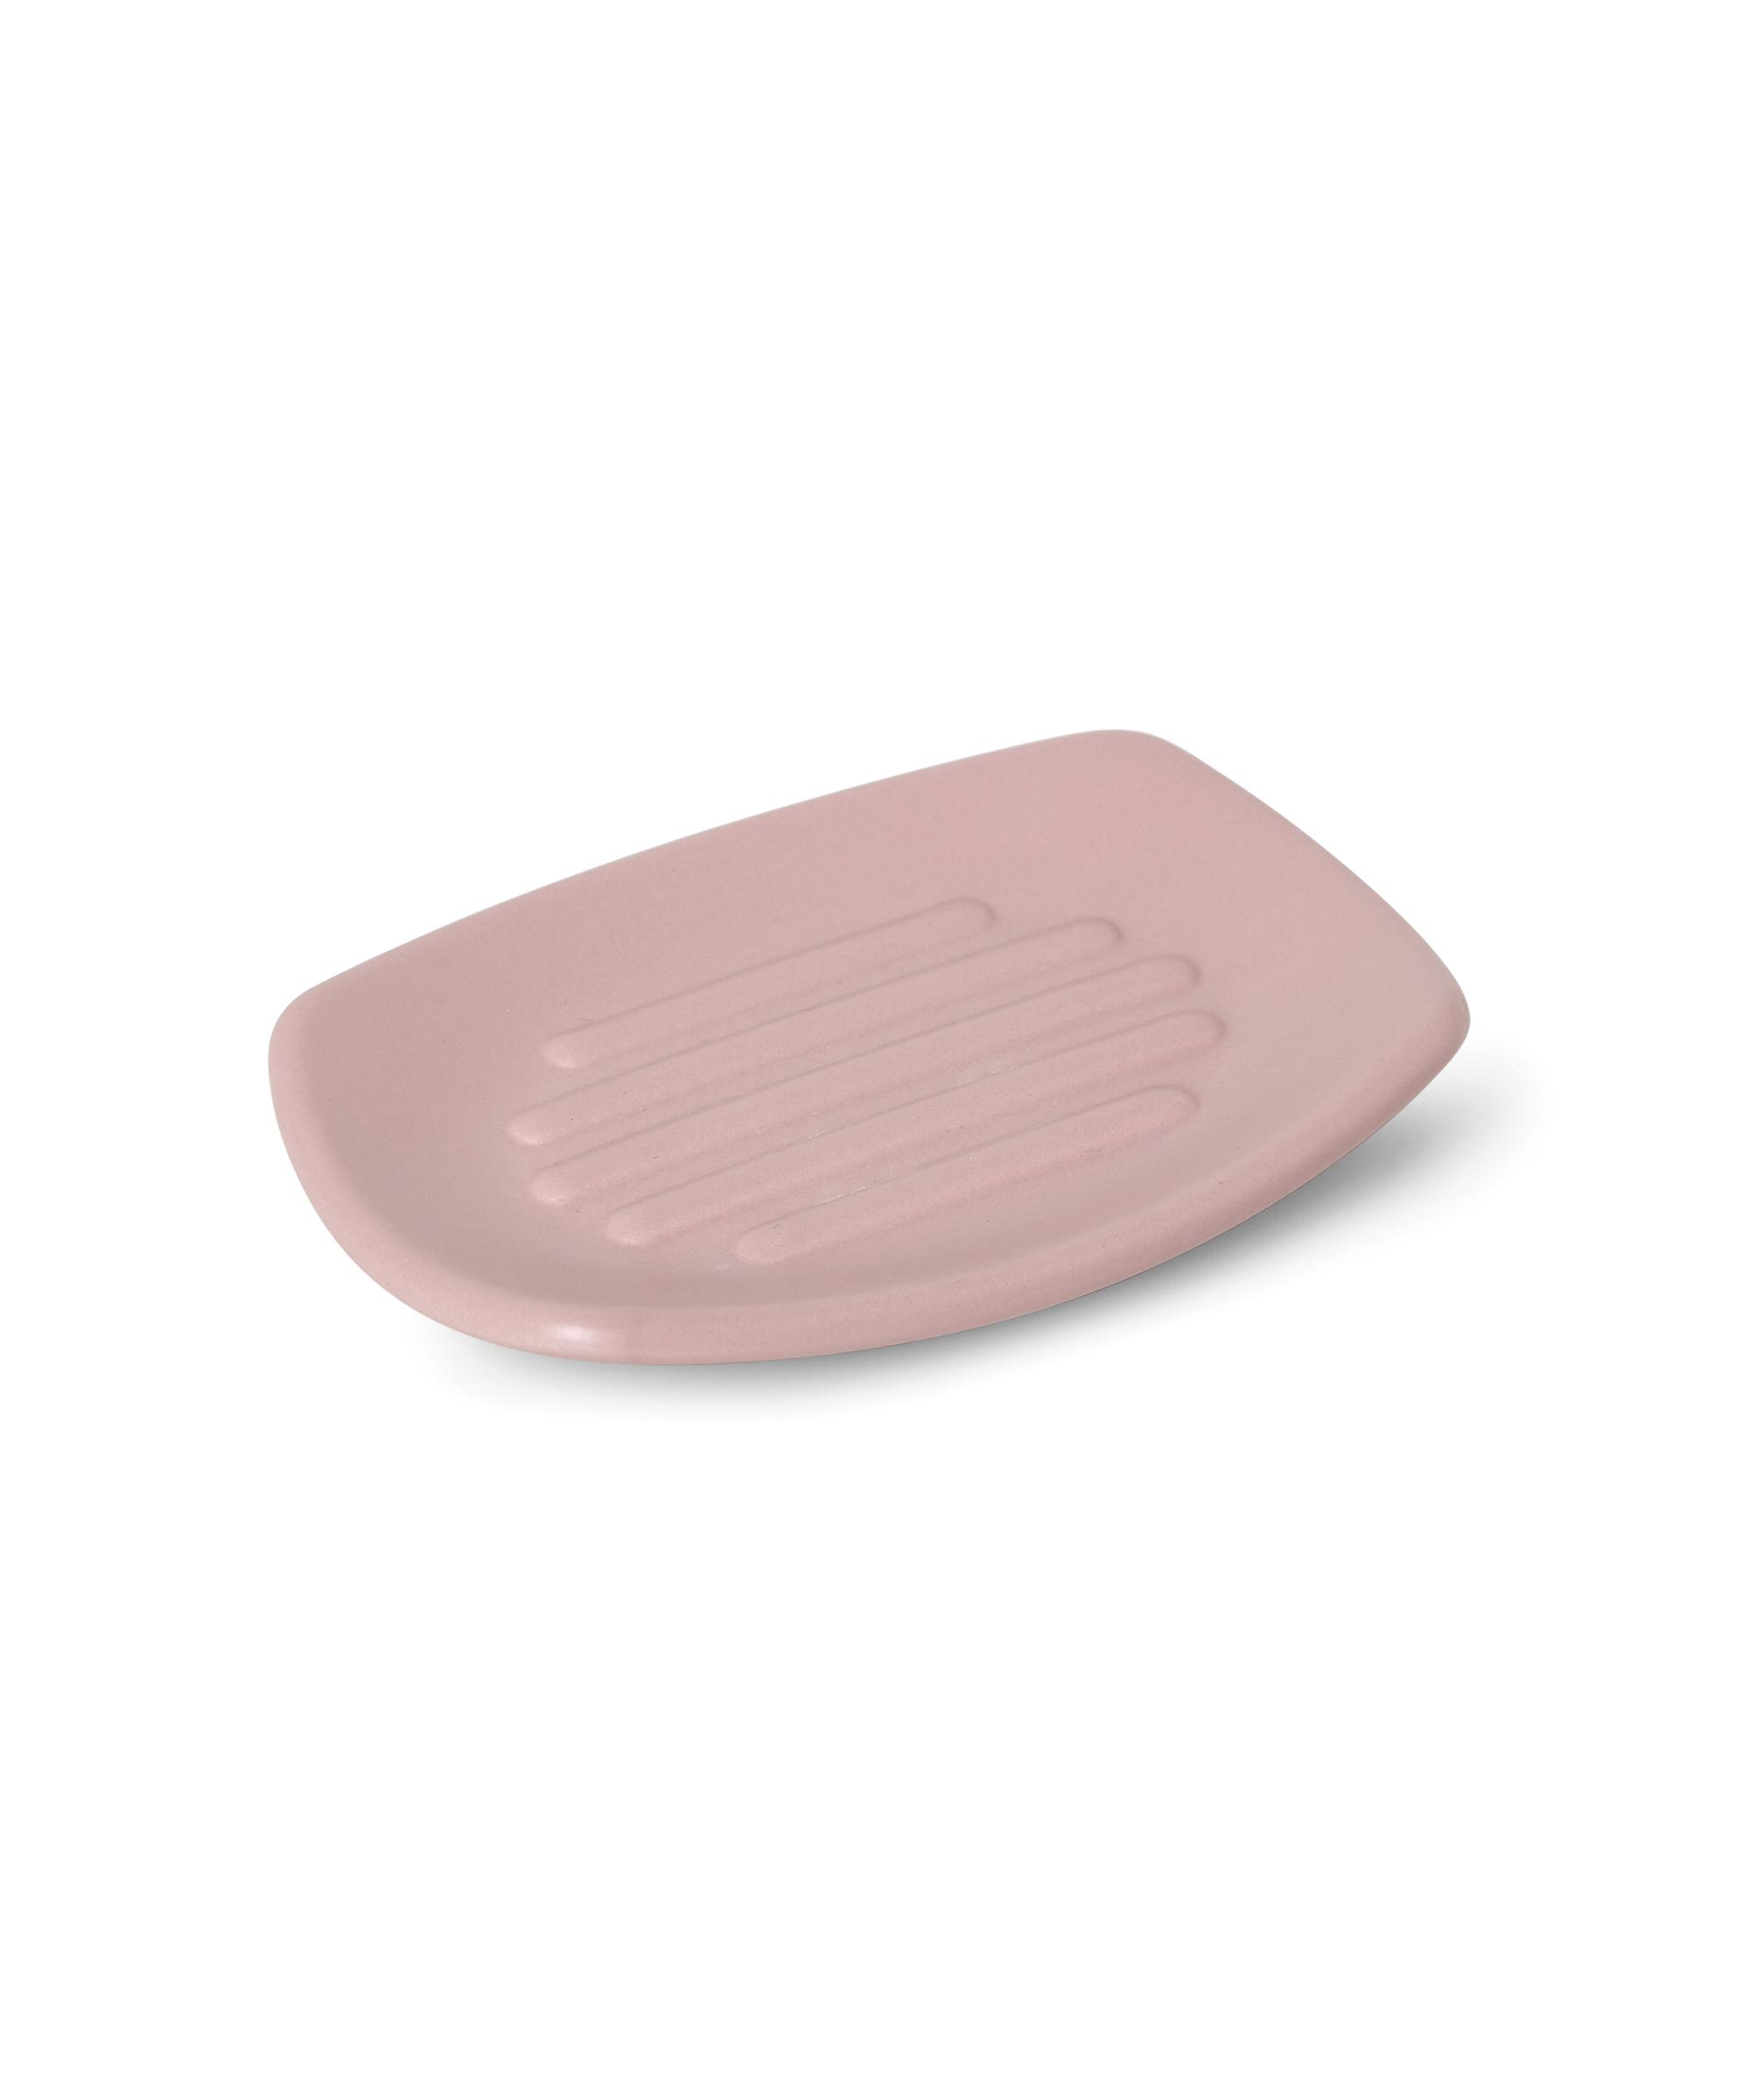 Vanička Na Mýdlo Melrina -Ext- - růžová, Konvenční, keramika (13,5/9,7/1,9cm) - Modern Living